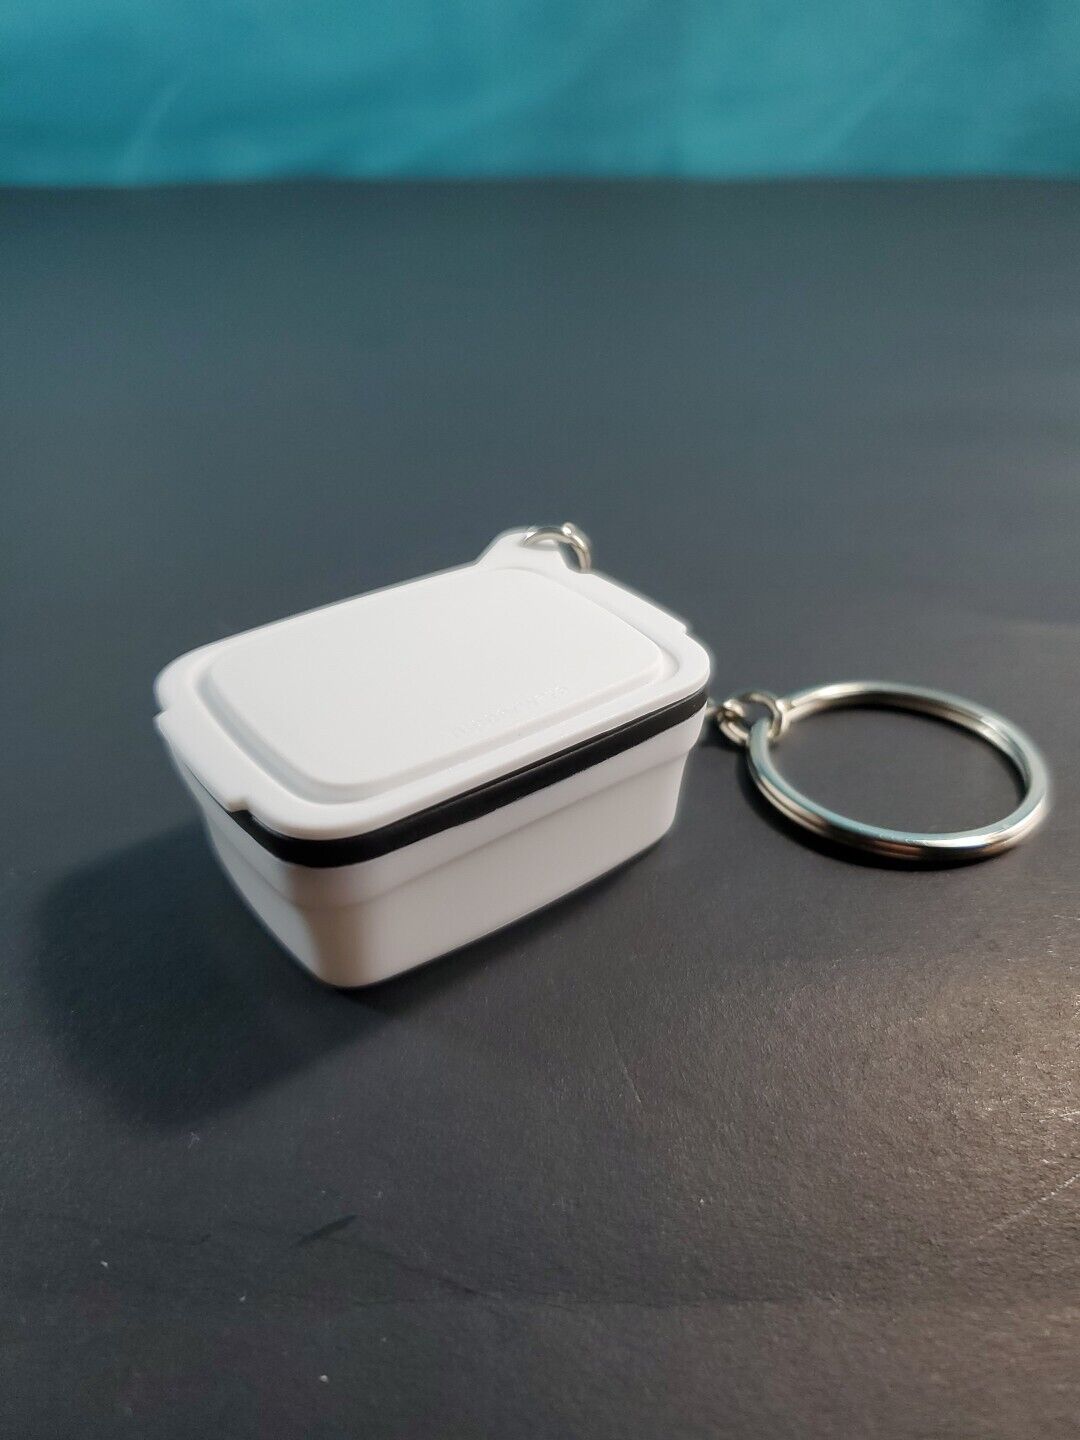 Tupperware Keychain Mini BreadSmart Smart Bread Box Travel Container Opens New